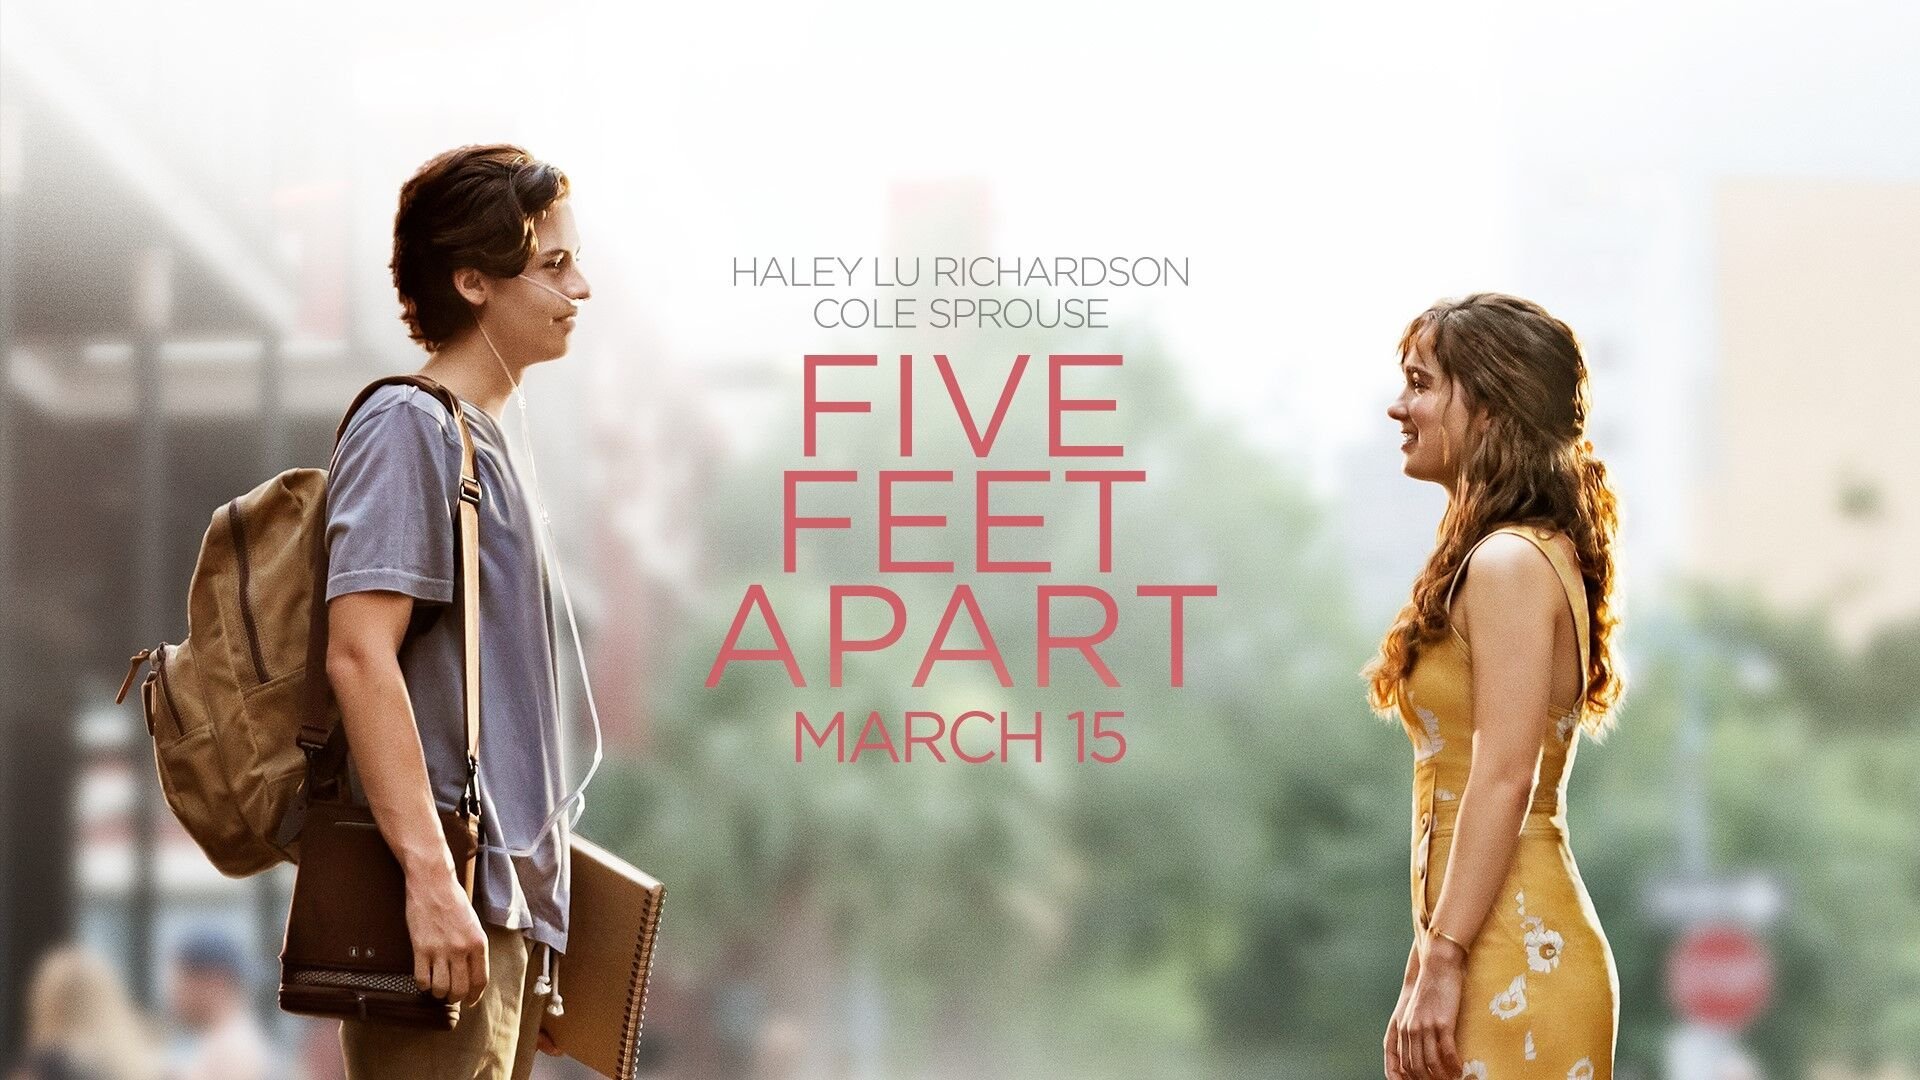 Five Feet Apart: Enter to Win! #FIVEFEETAPART #AD #RWM